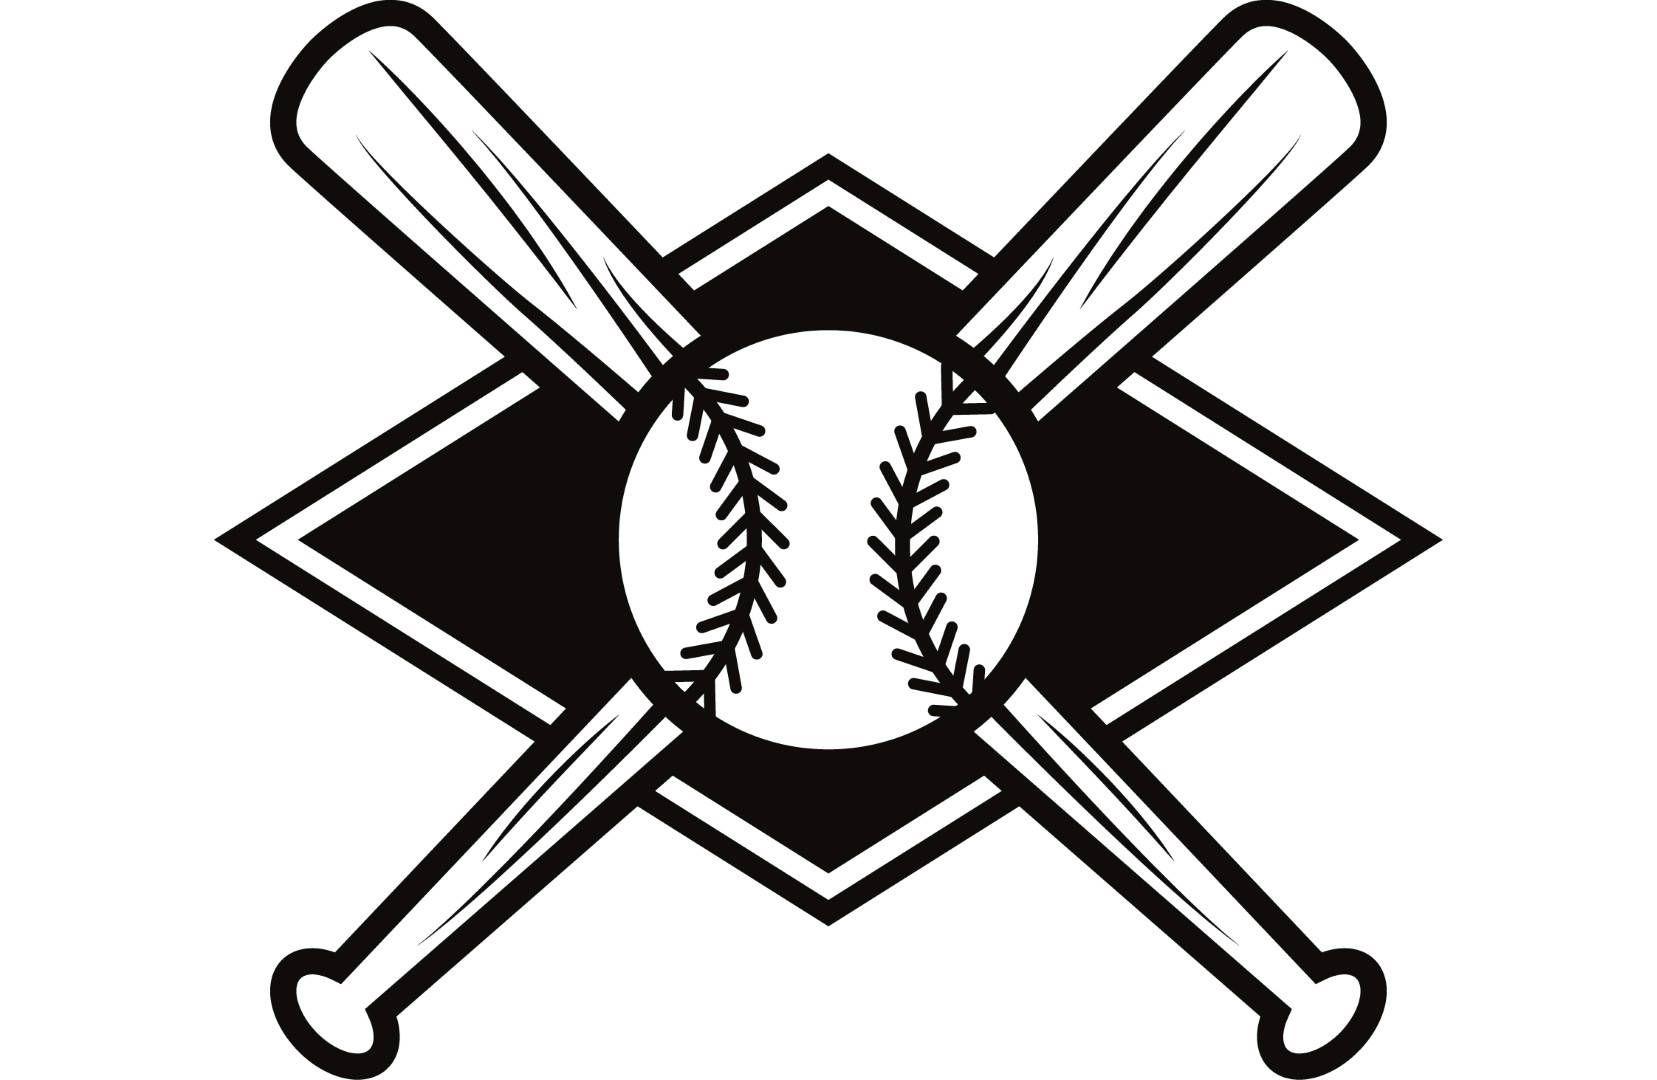 Bat Sports Logo - Baseball Logo 7 Bats Crossed Ball Diamond League Equipment | Etsy